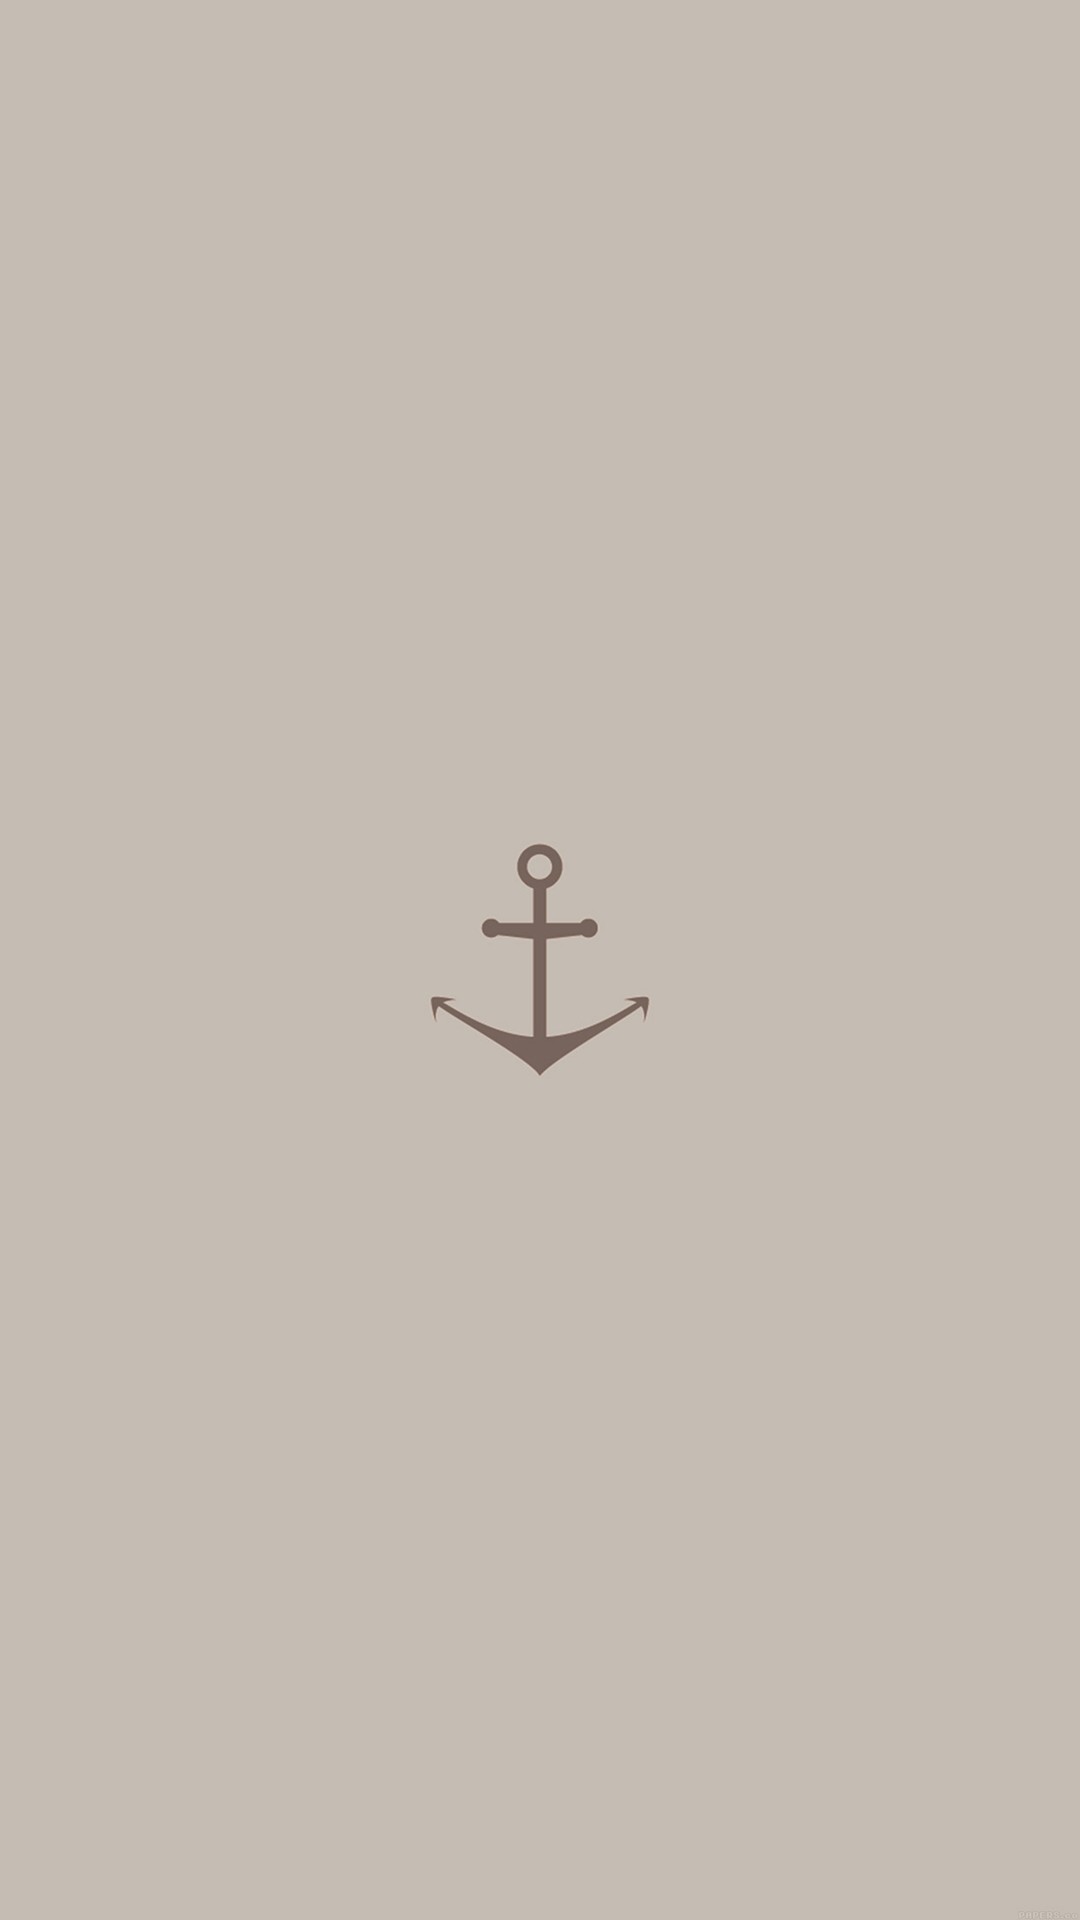 1080x1920 Minimal Sea Anchor Logo Red Art iPhone 6 wallpaper